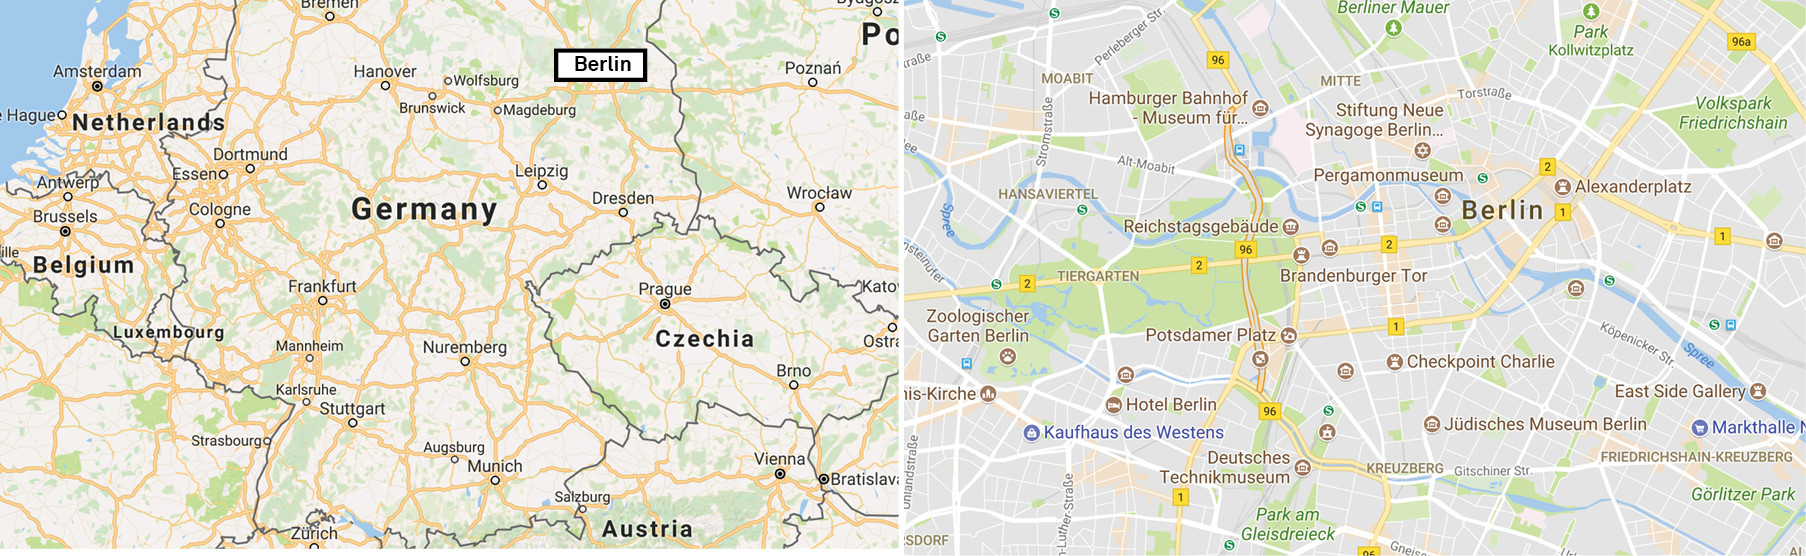 Berlin-Map